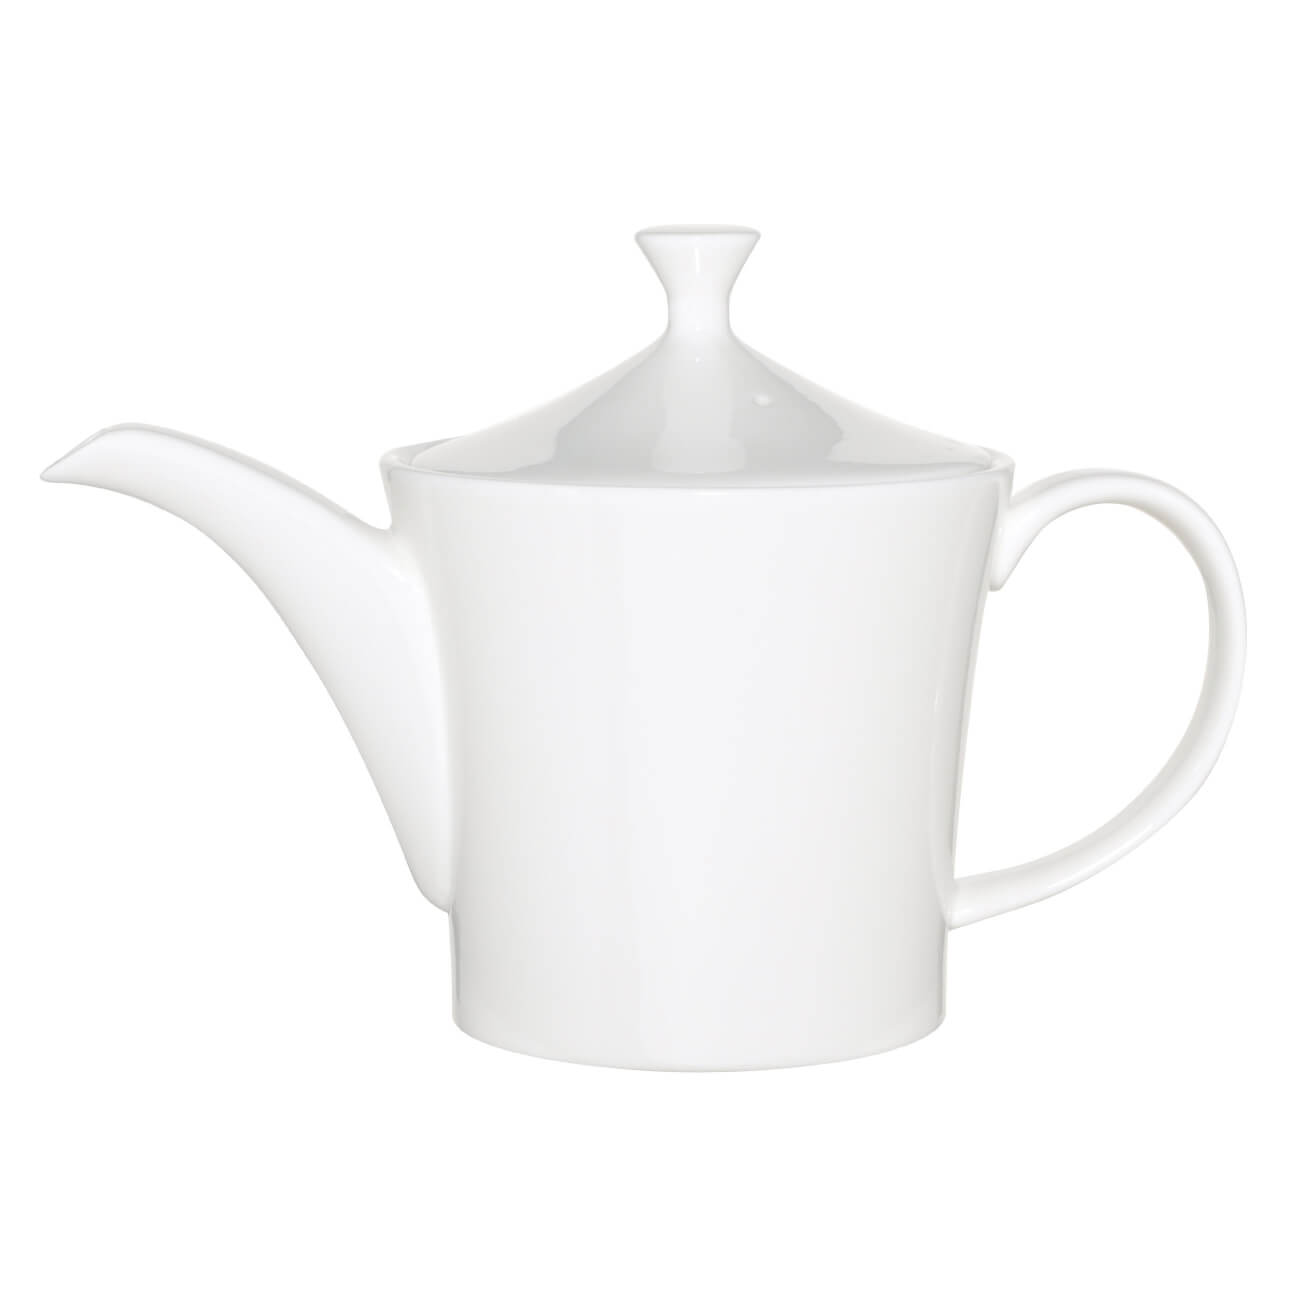 Чайник заварочный, 800 мл, фарфор F, белый, Ideal white чайник заварочный чер1 л